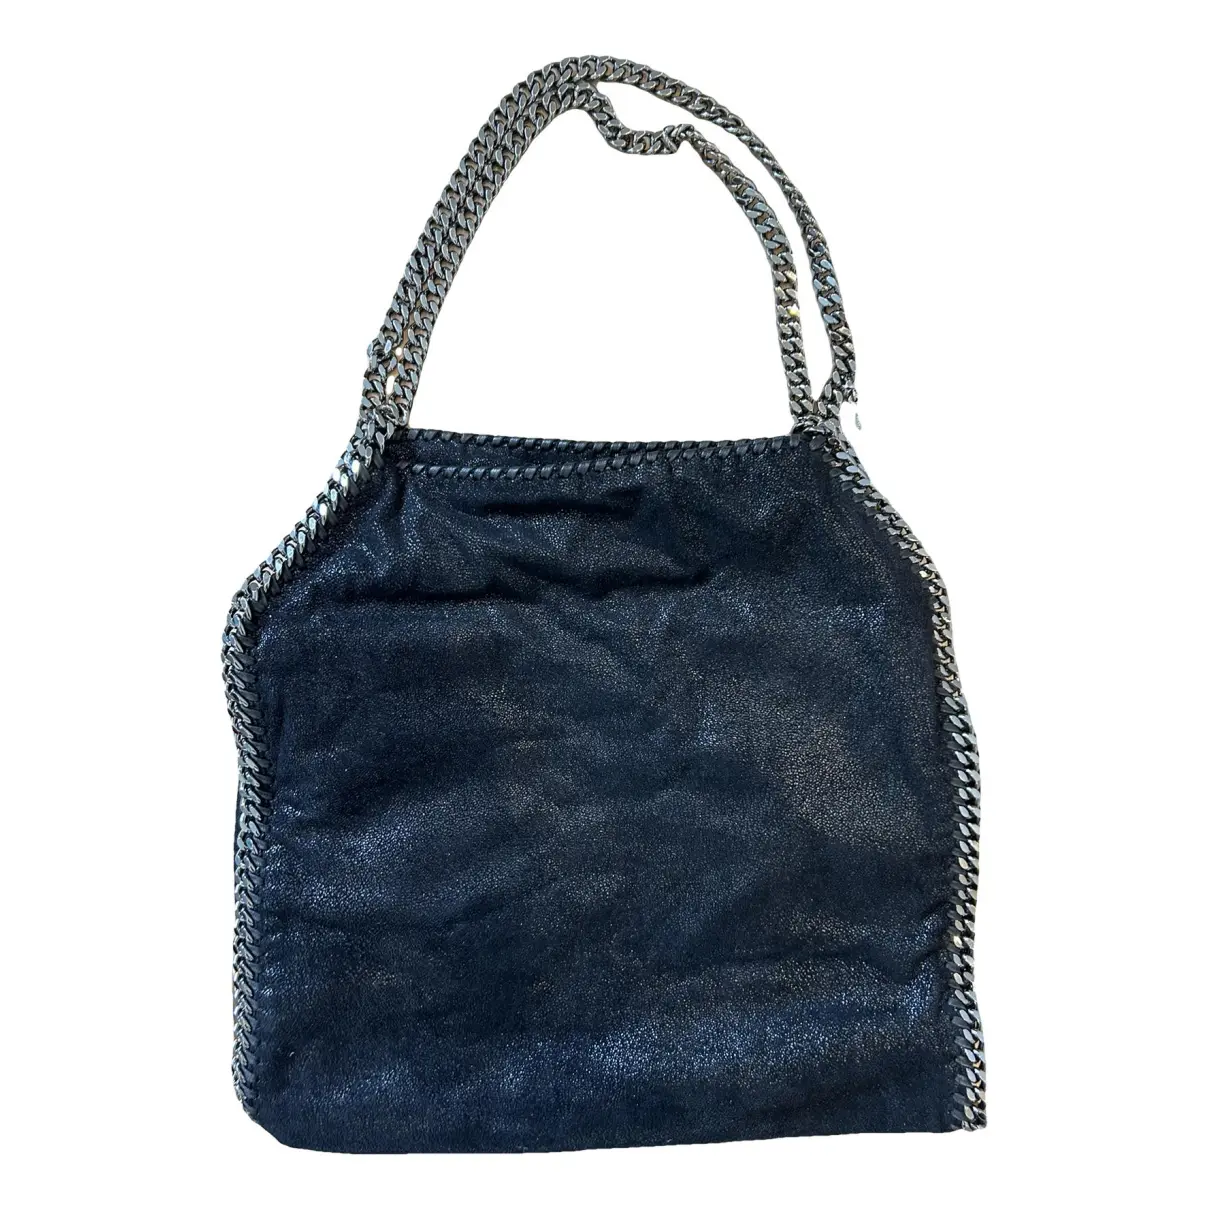 Falabella leather handbag